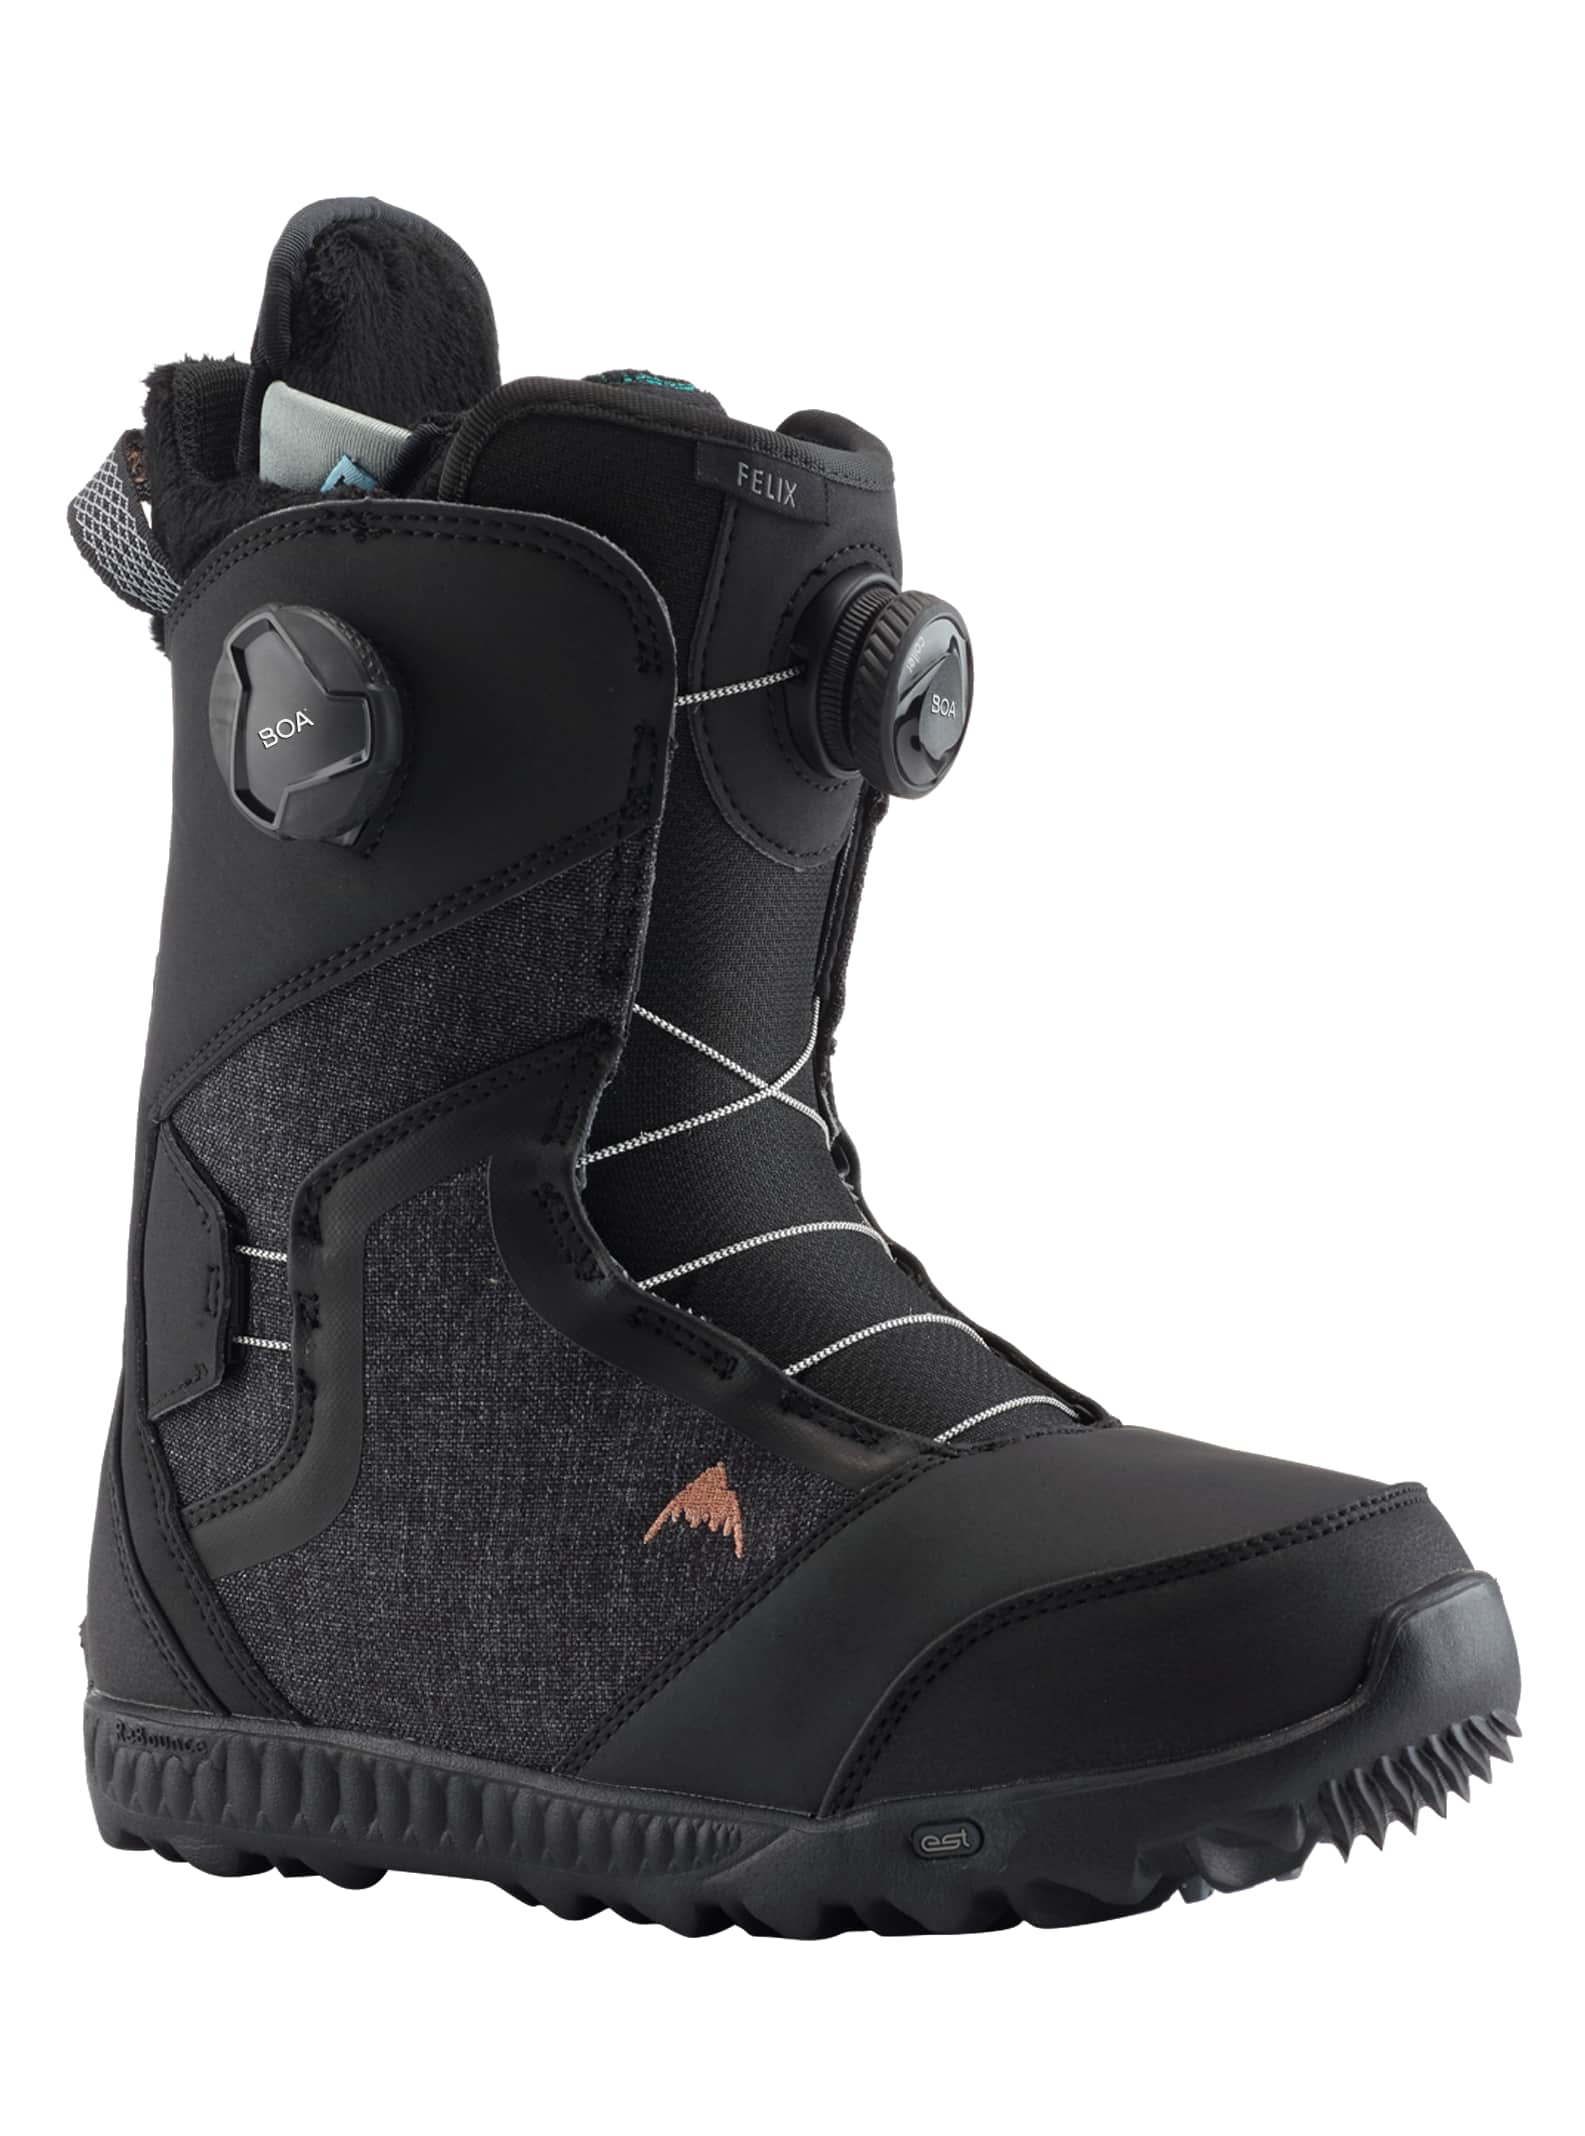 Burton - Boots de snowboard Felix Boa® femme, Black, 8.5